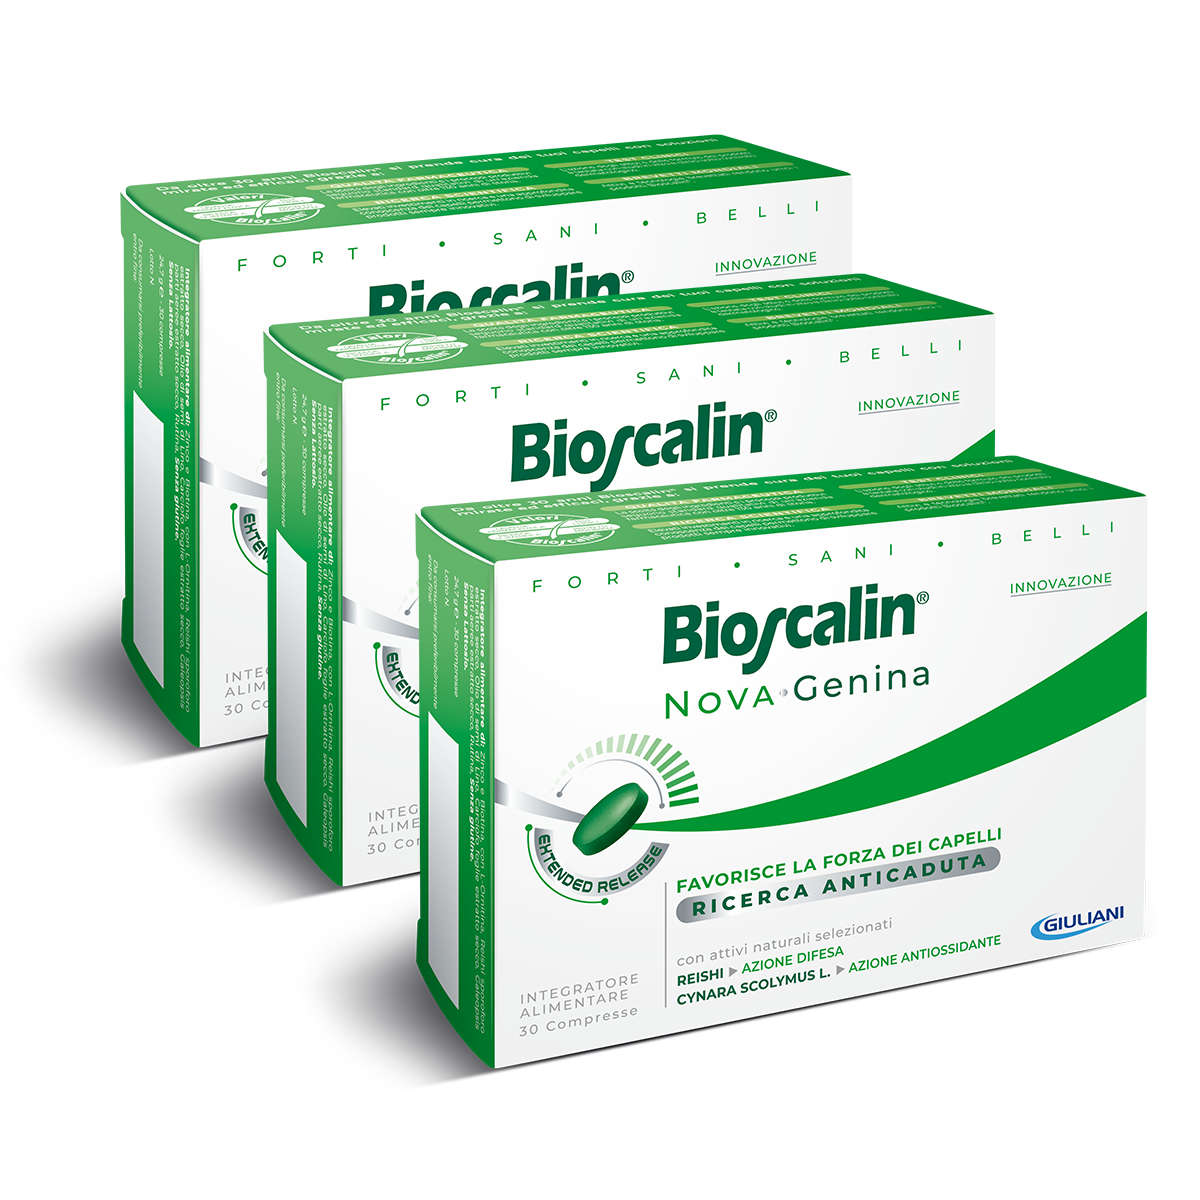 Bioscalin - Nova Genina - 90 compresse - Offerta 2+1 mesi